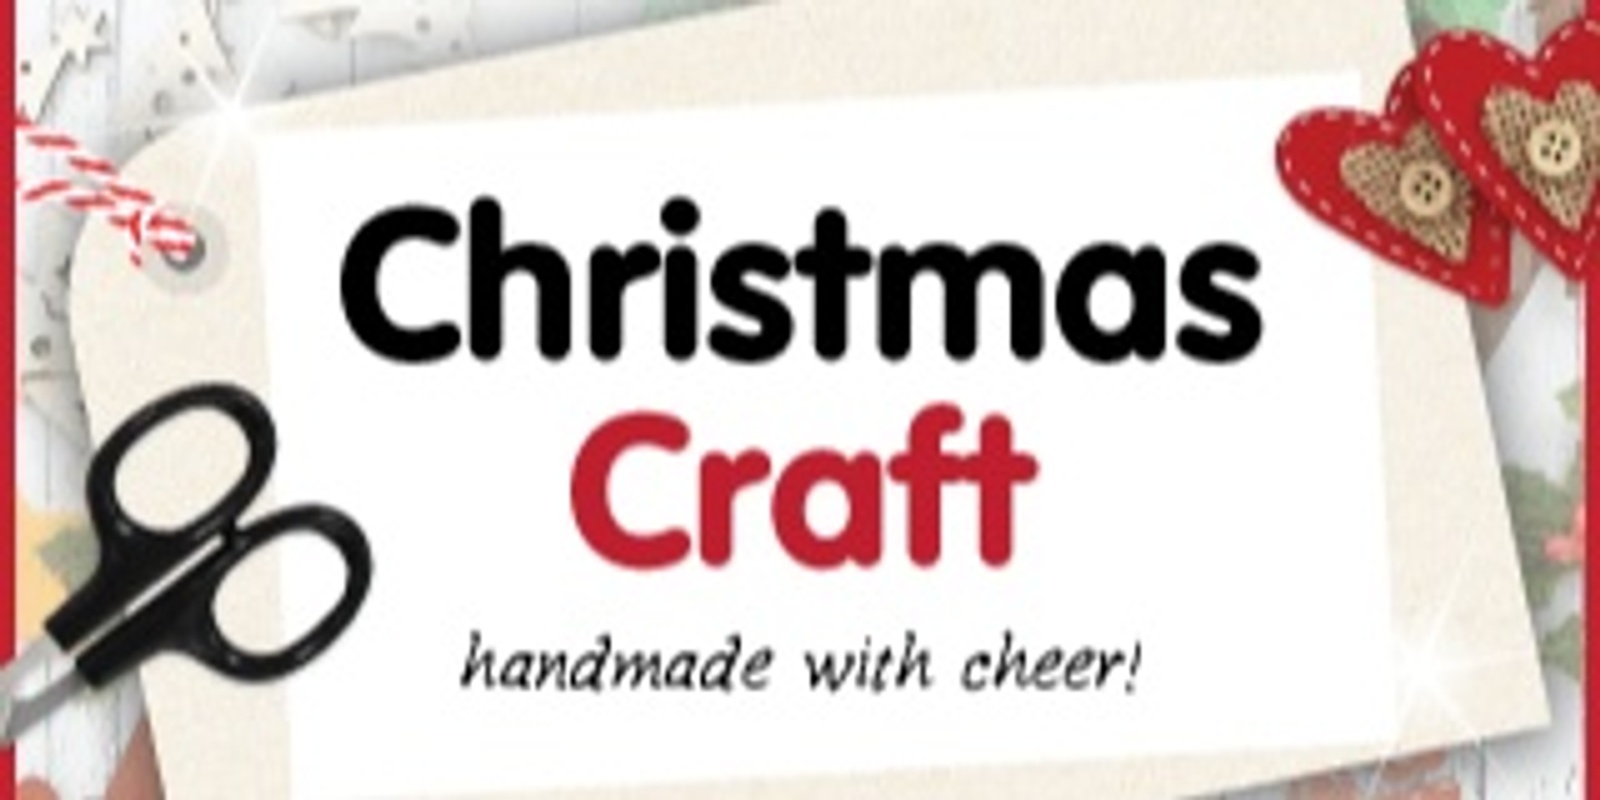 Banner image for Christmas gift making workshop